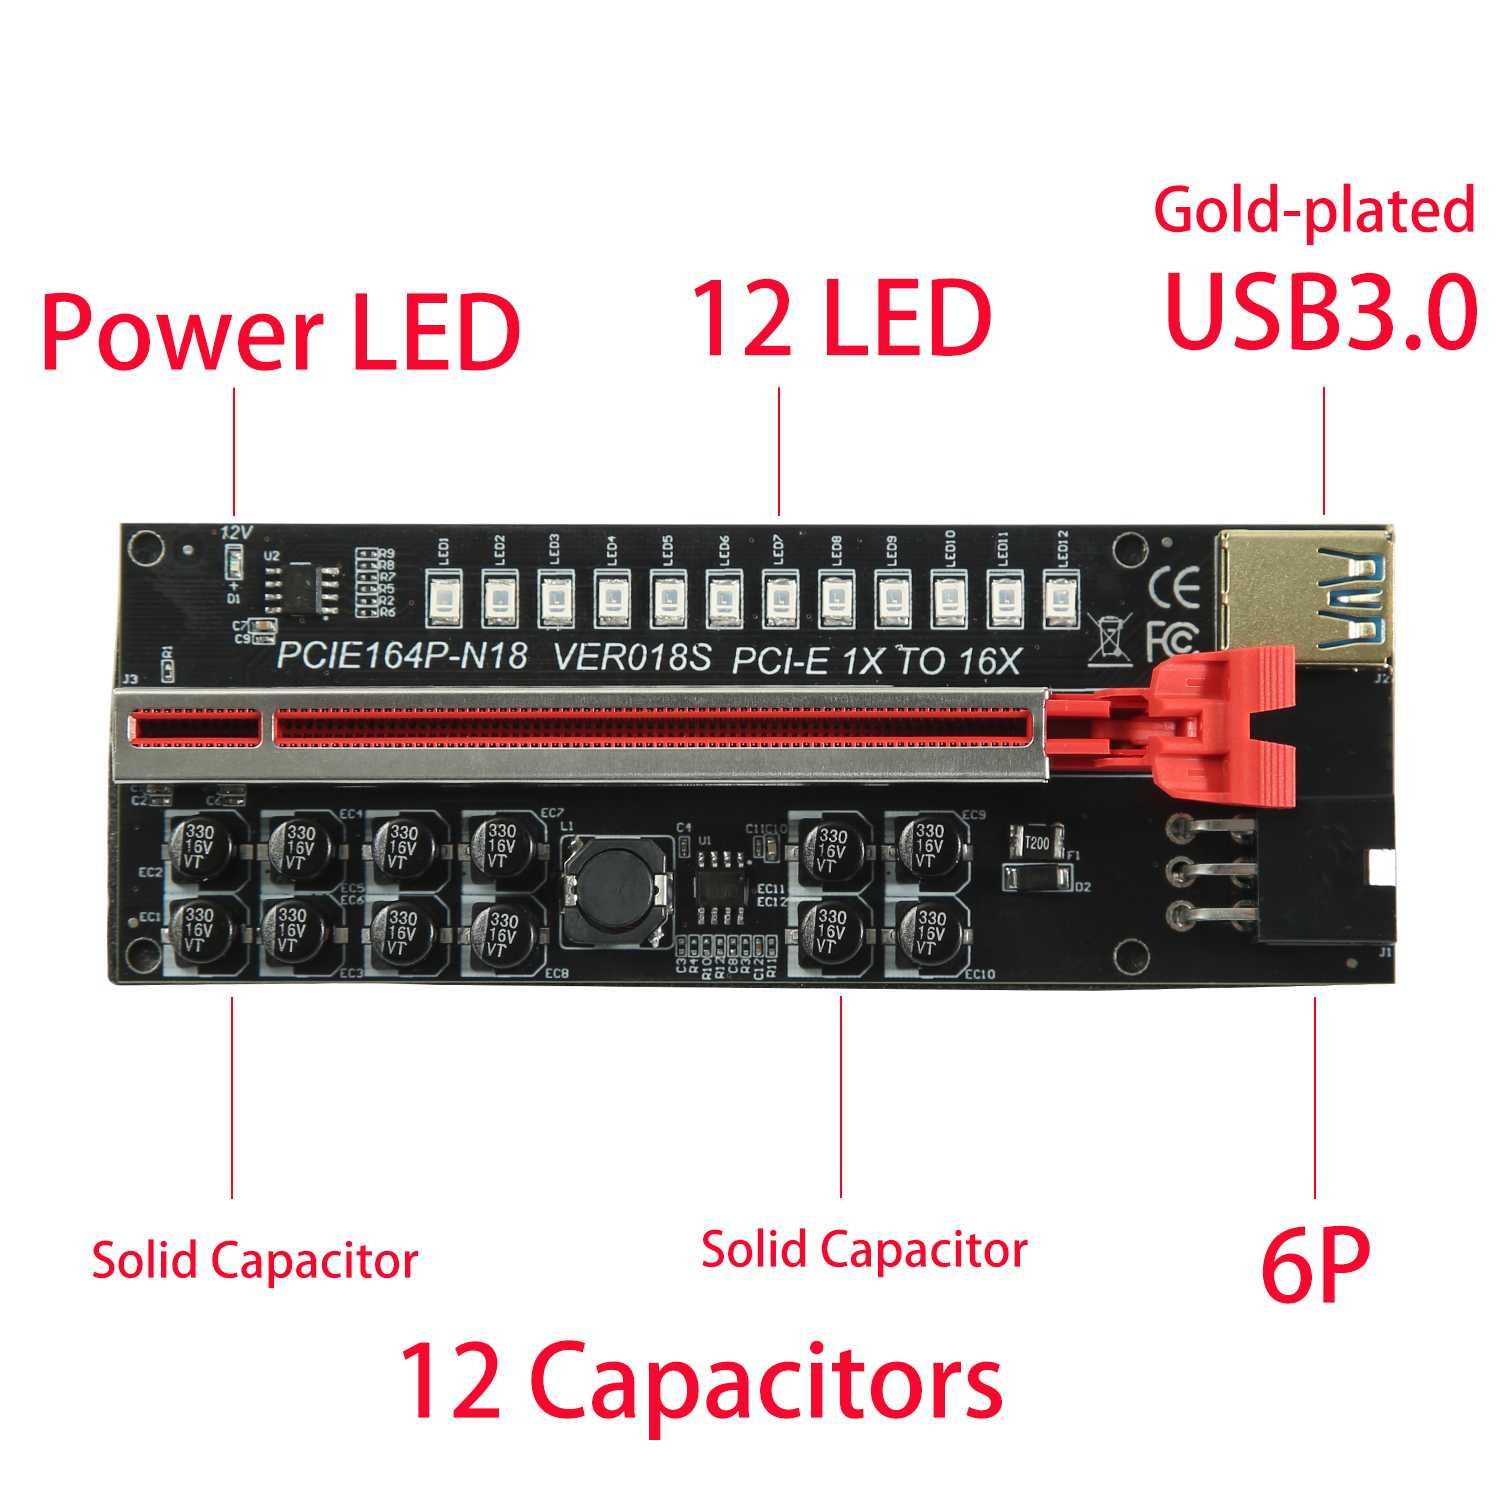 Райзер для майнингу PCI-E 1x to 16x ver 018S ОПТ!!!